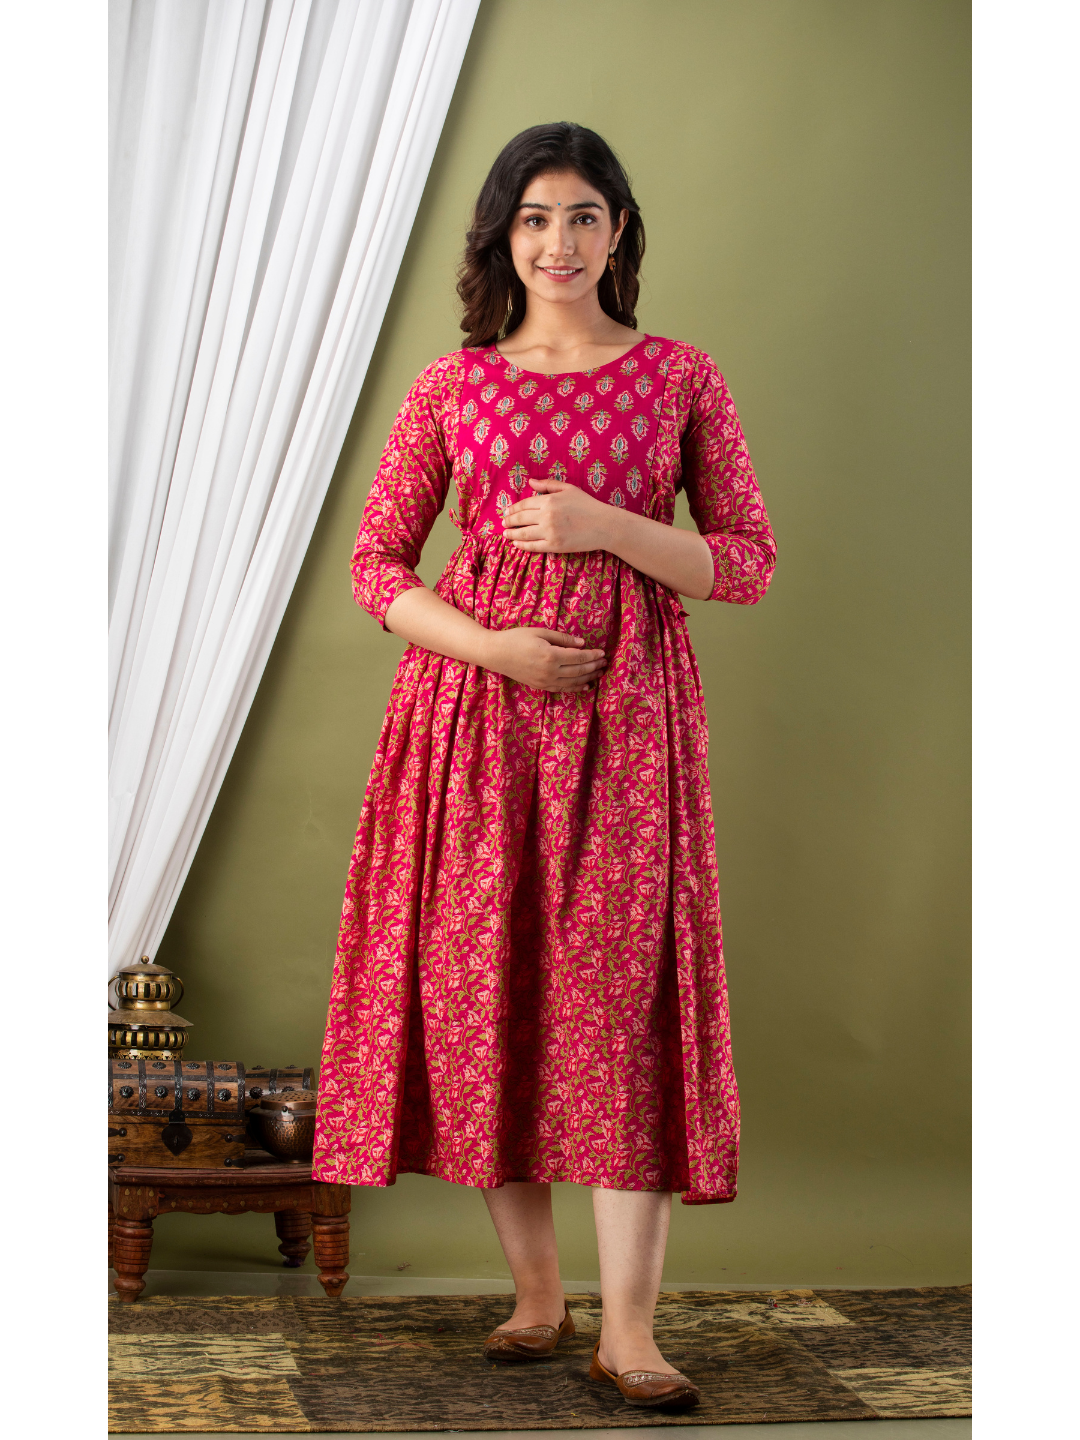 Maternity Wear - Indian Maternity Gowns - RSM Silks